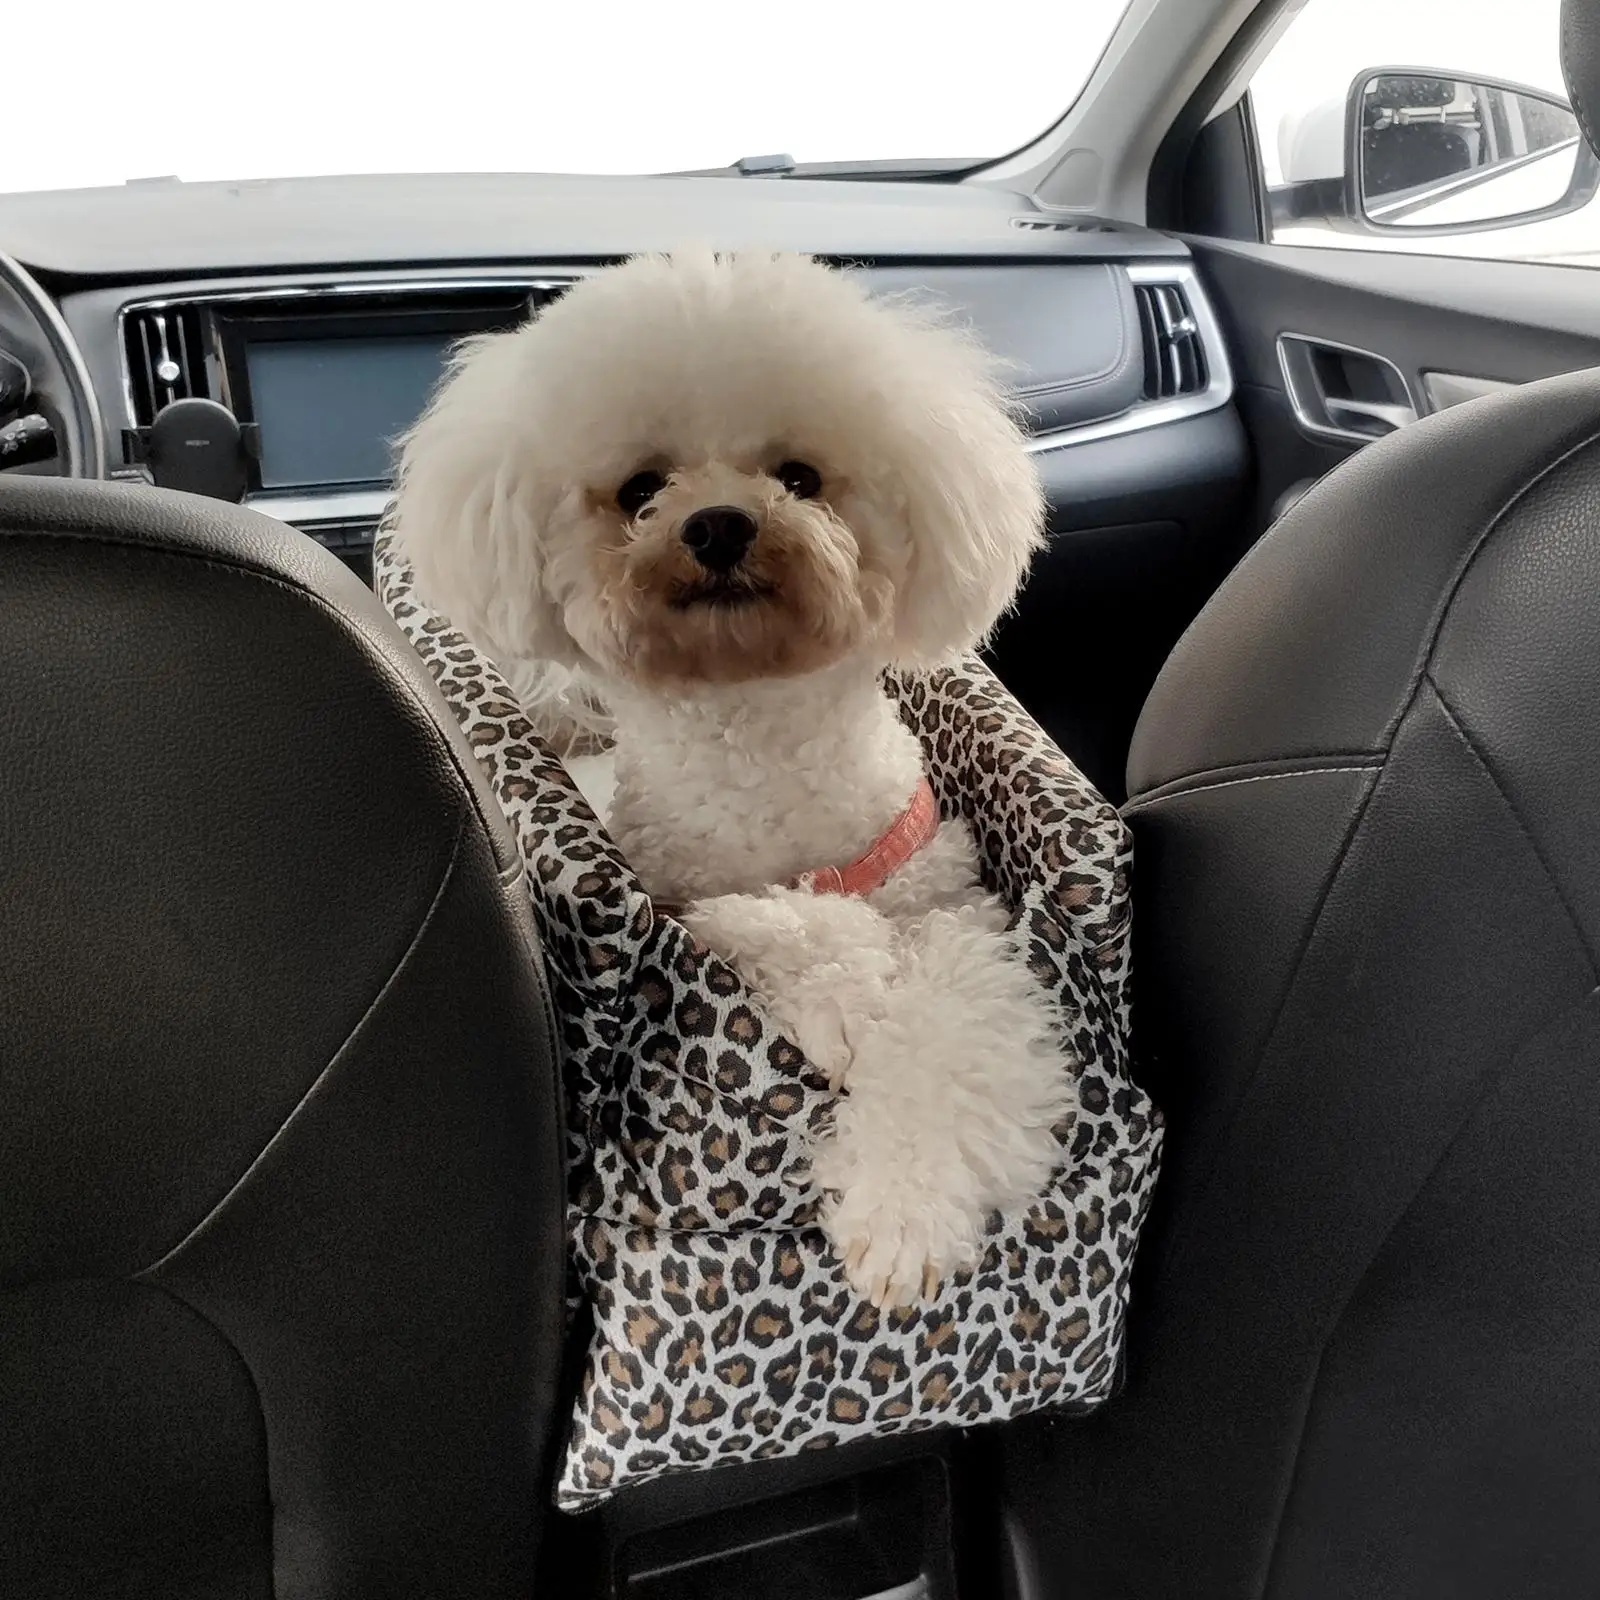 Leopard Car Booster Seat Removable Washable Safe Soft for Dog Cat 